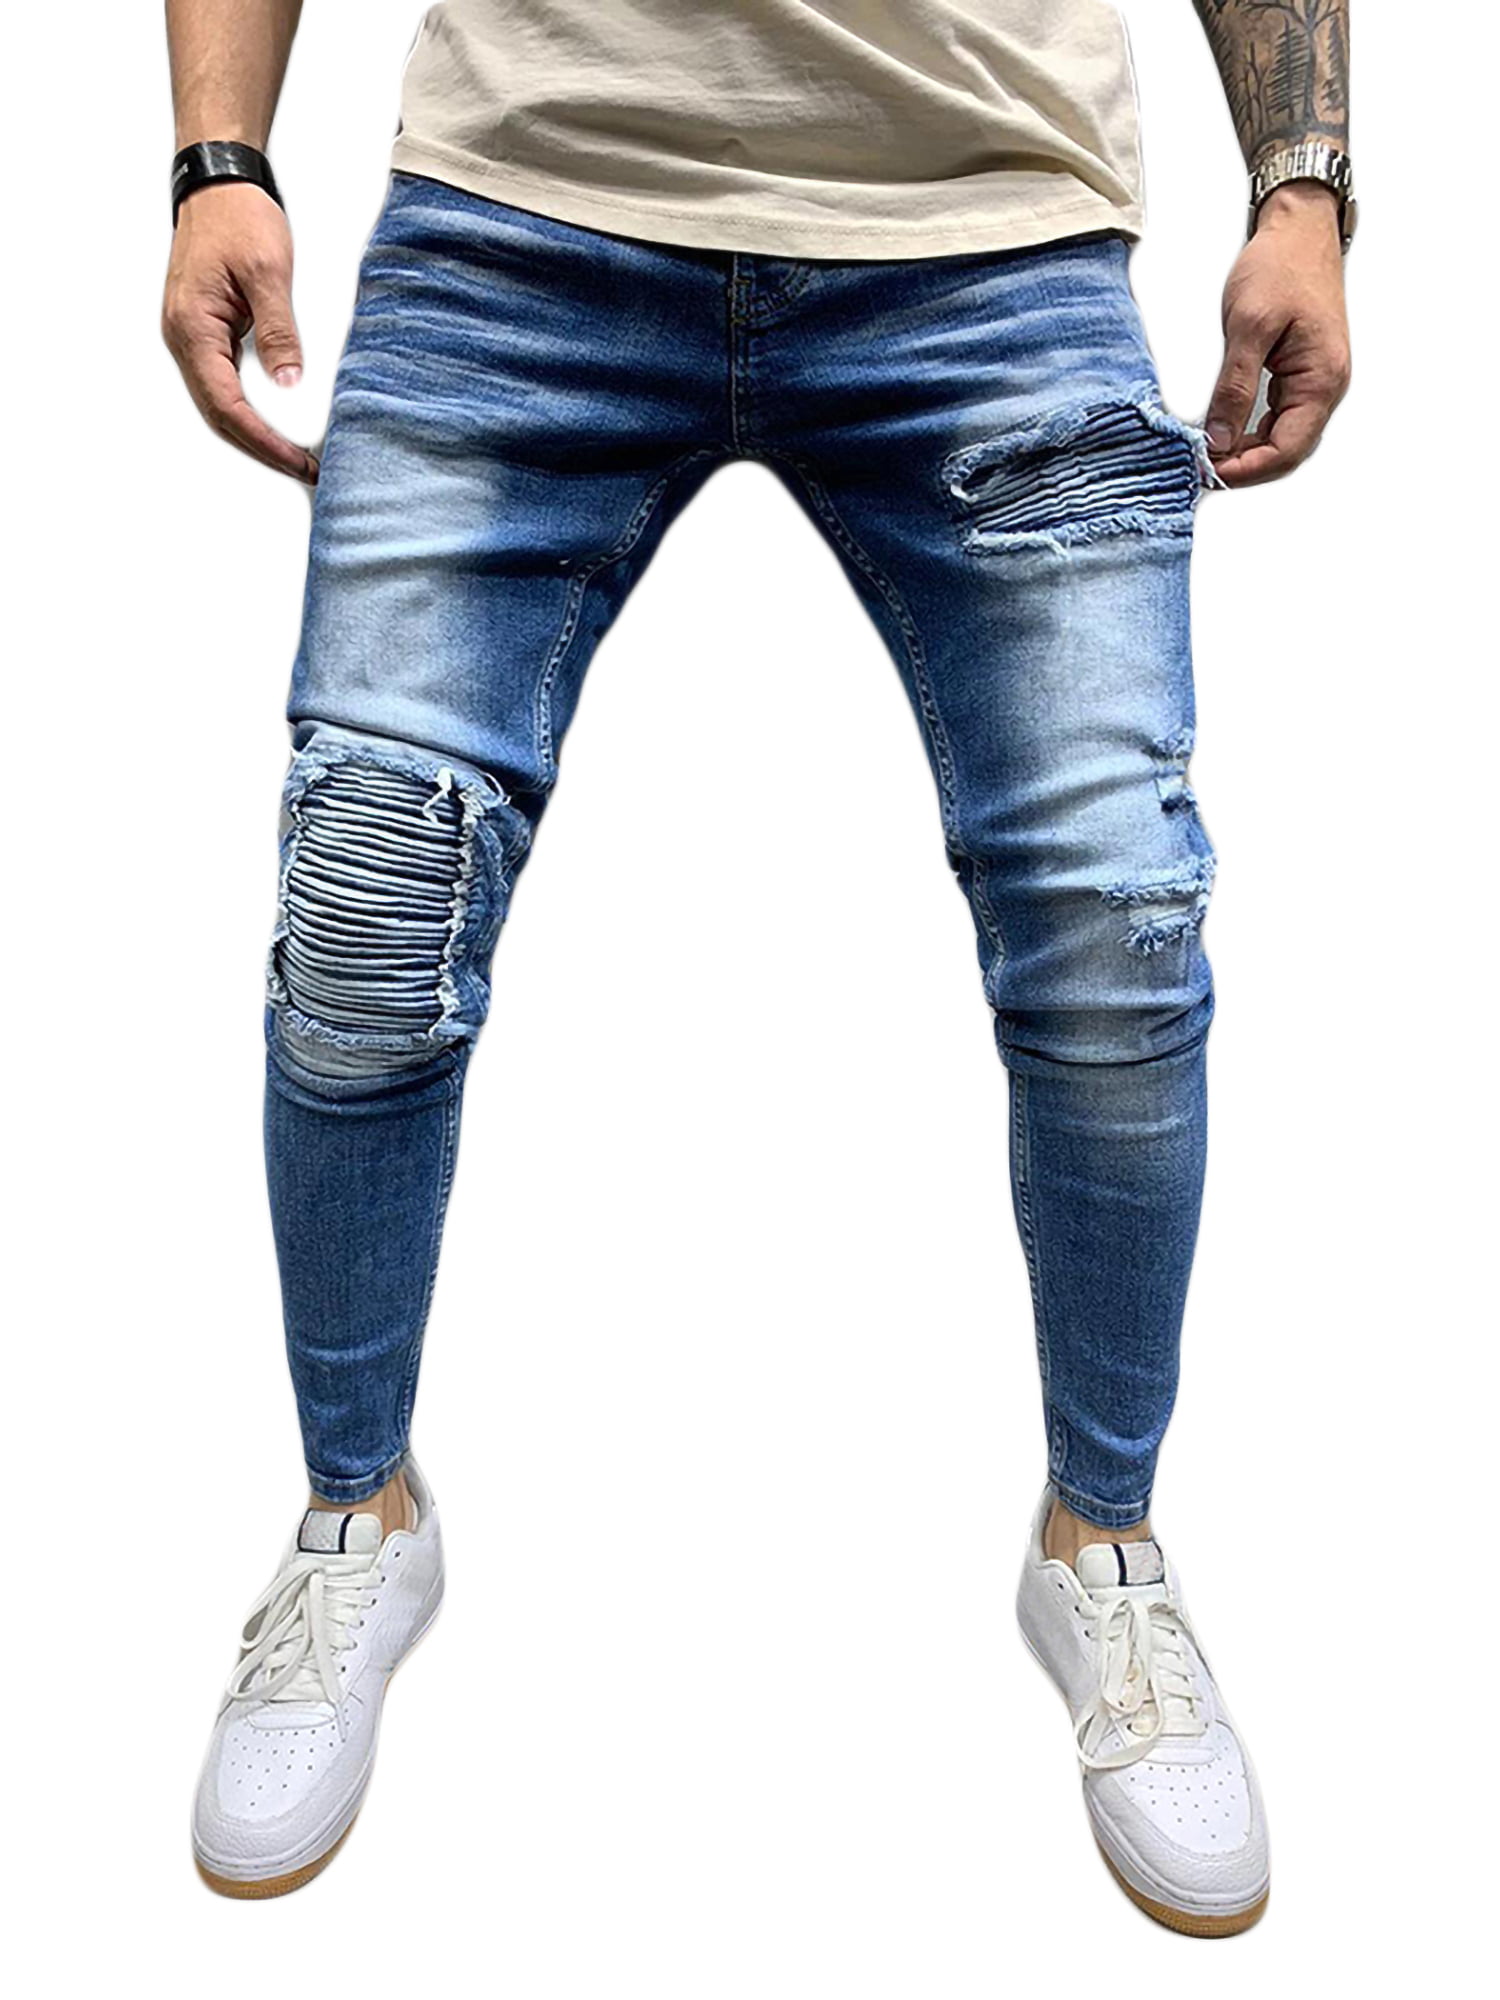 WSPLYSPJY Mens Ripped Distressed Destroyed Straight Fit Biker Jeans Denim Pants